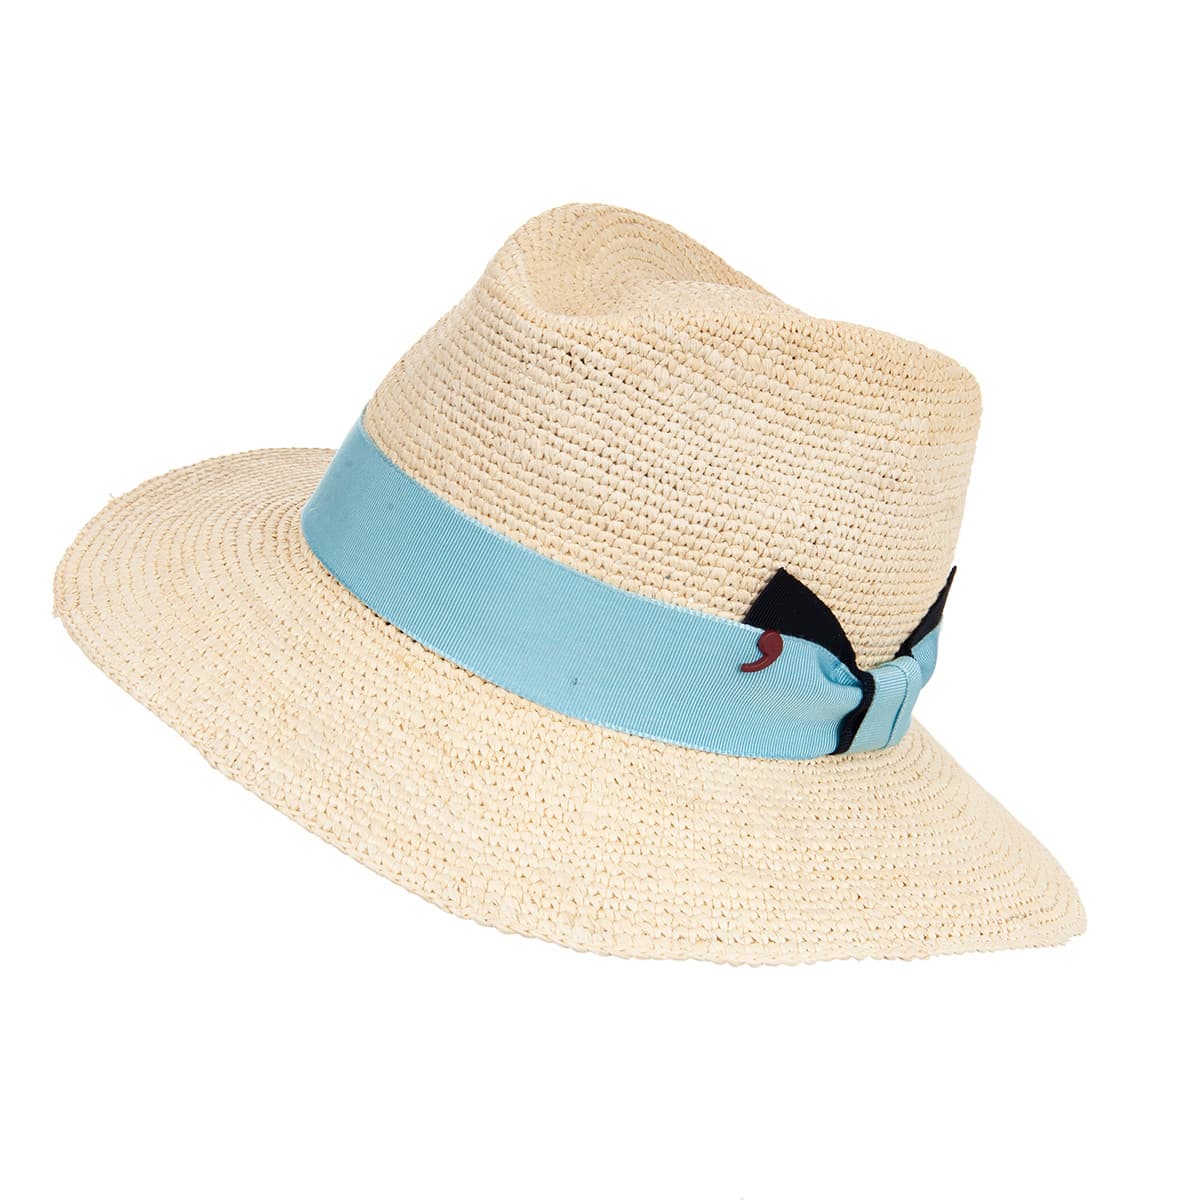 ALFONSO D'ESTE  Braided summer hat for men 100% Panama --> Online